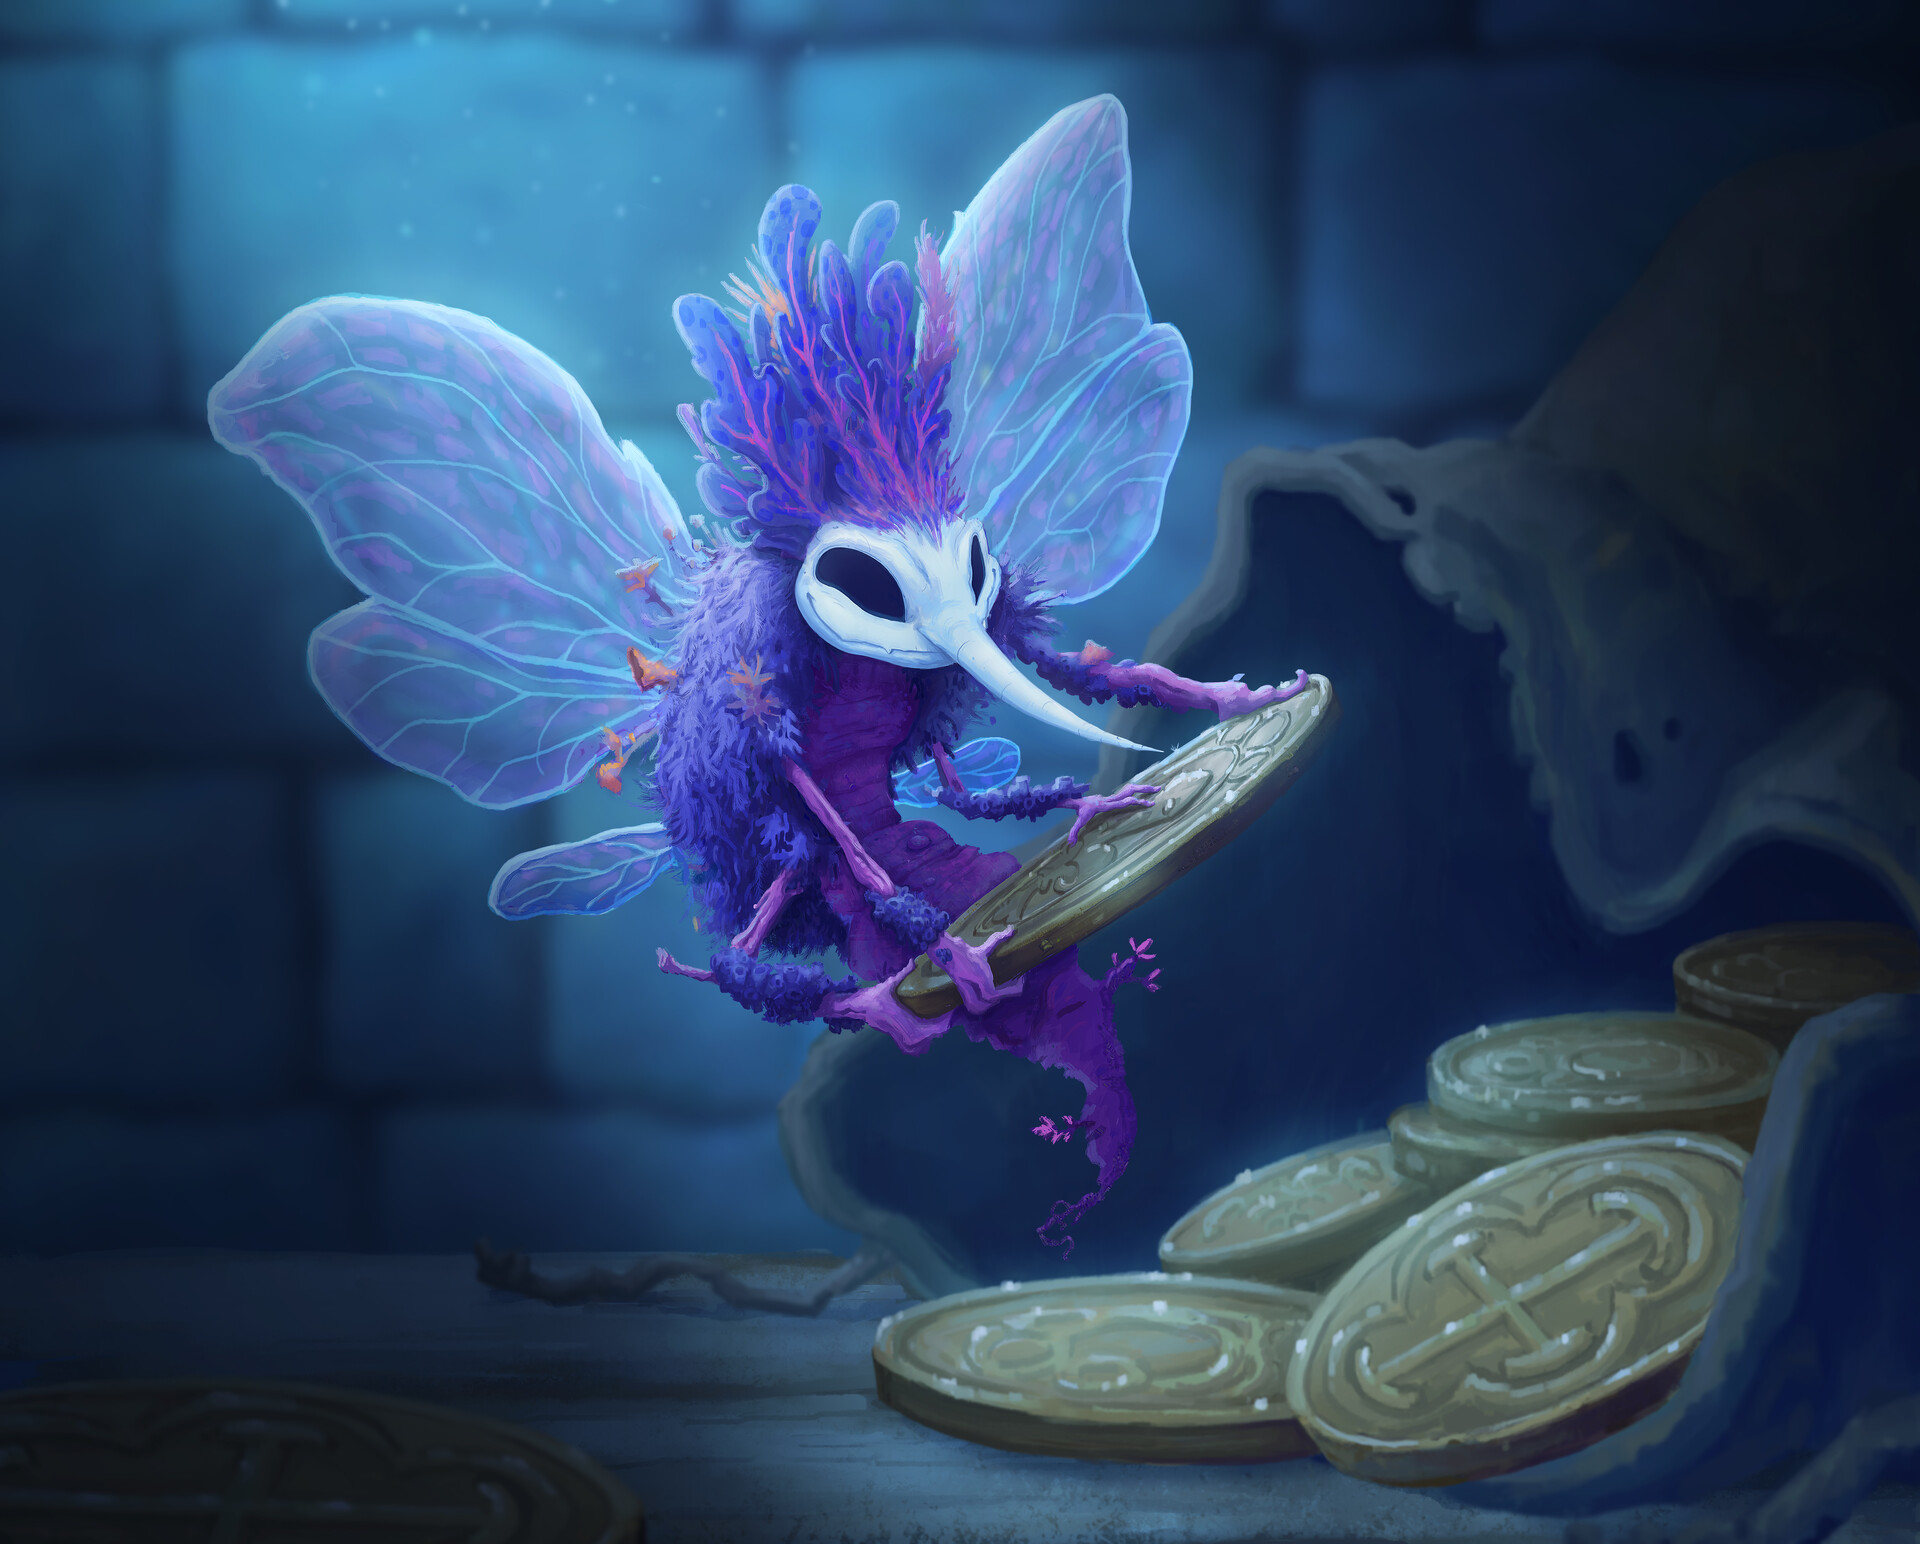 ArtStation - Fairy thief character design